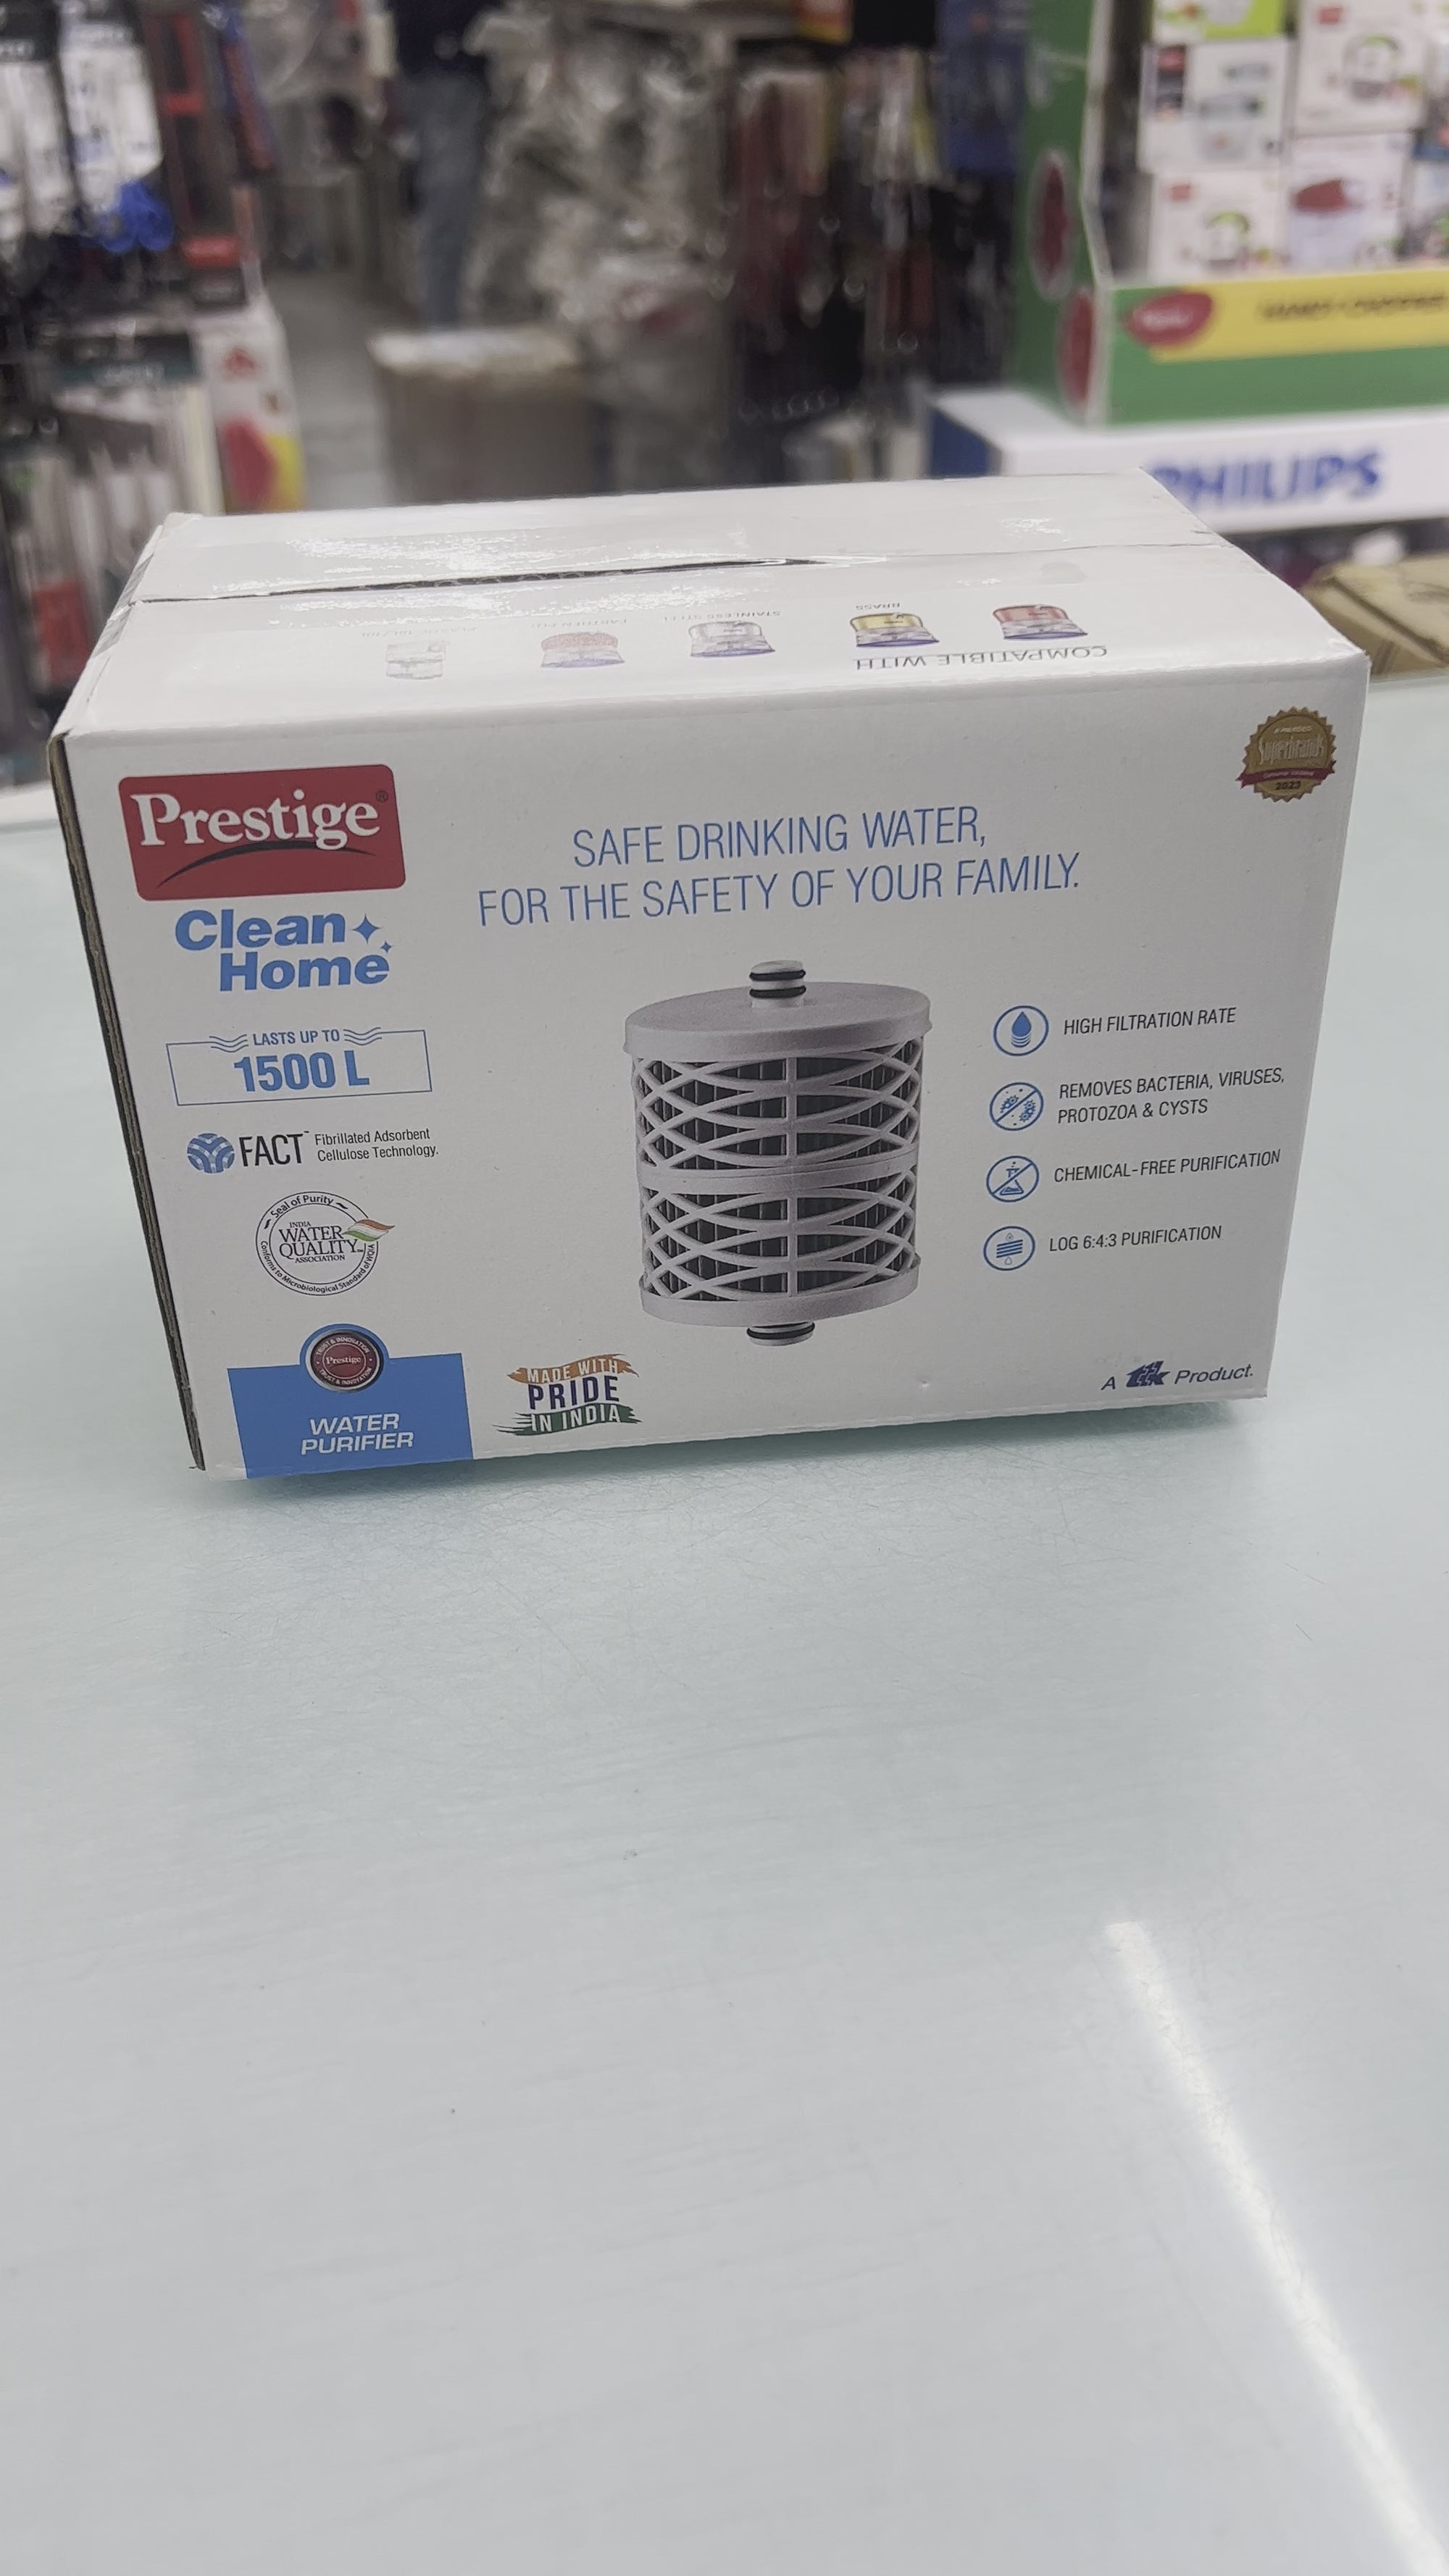 Prestige Water Purifier Cartridge 1500 Liters purification capacity